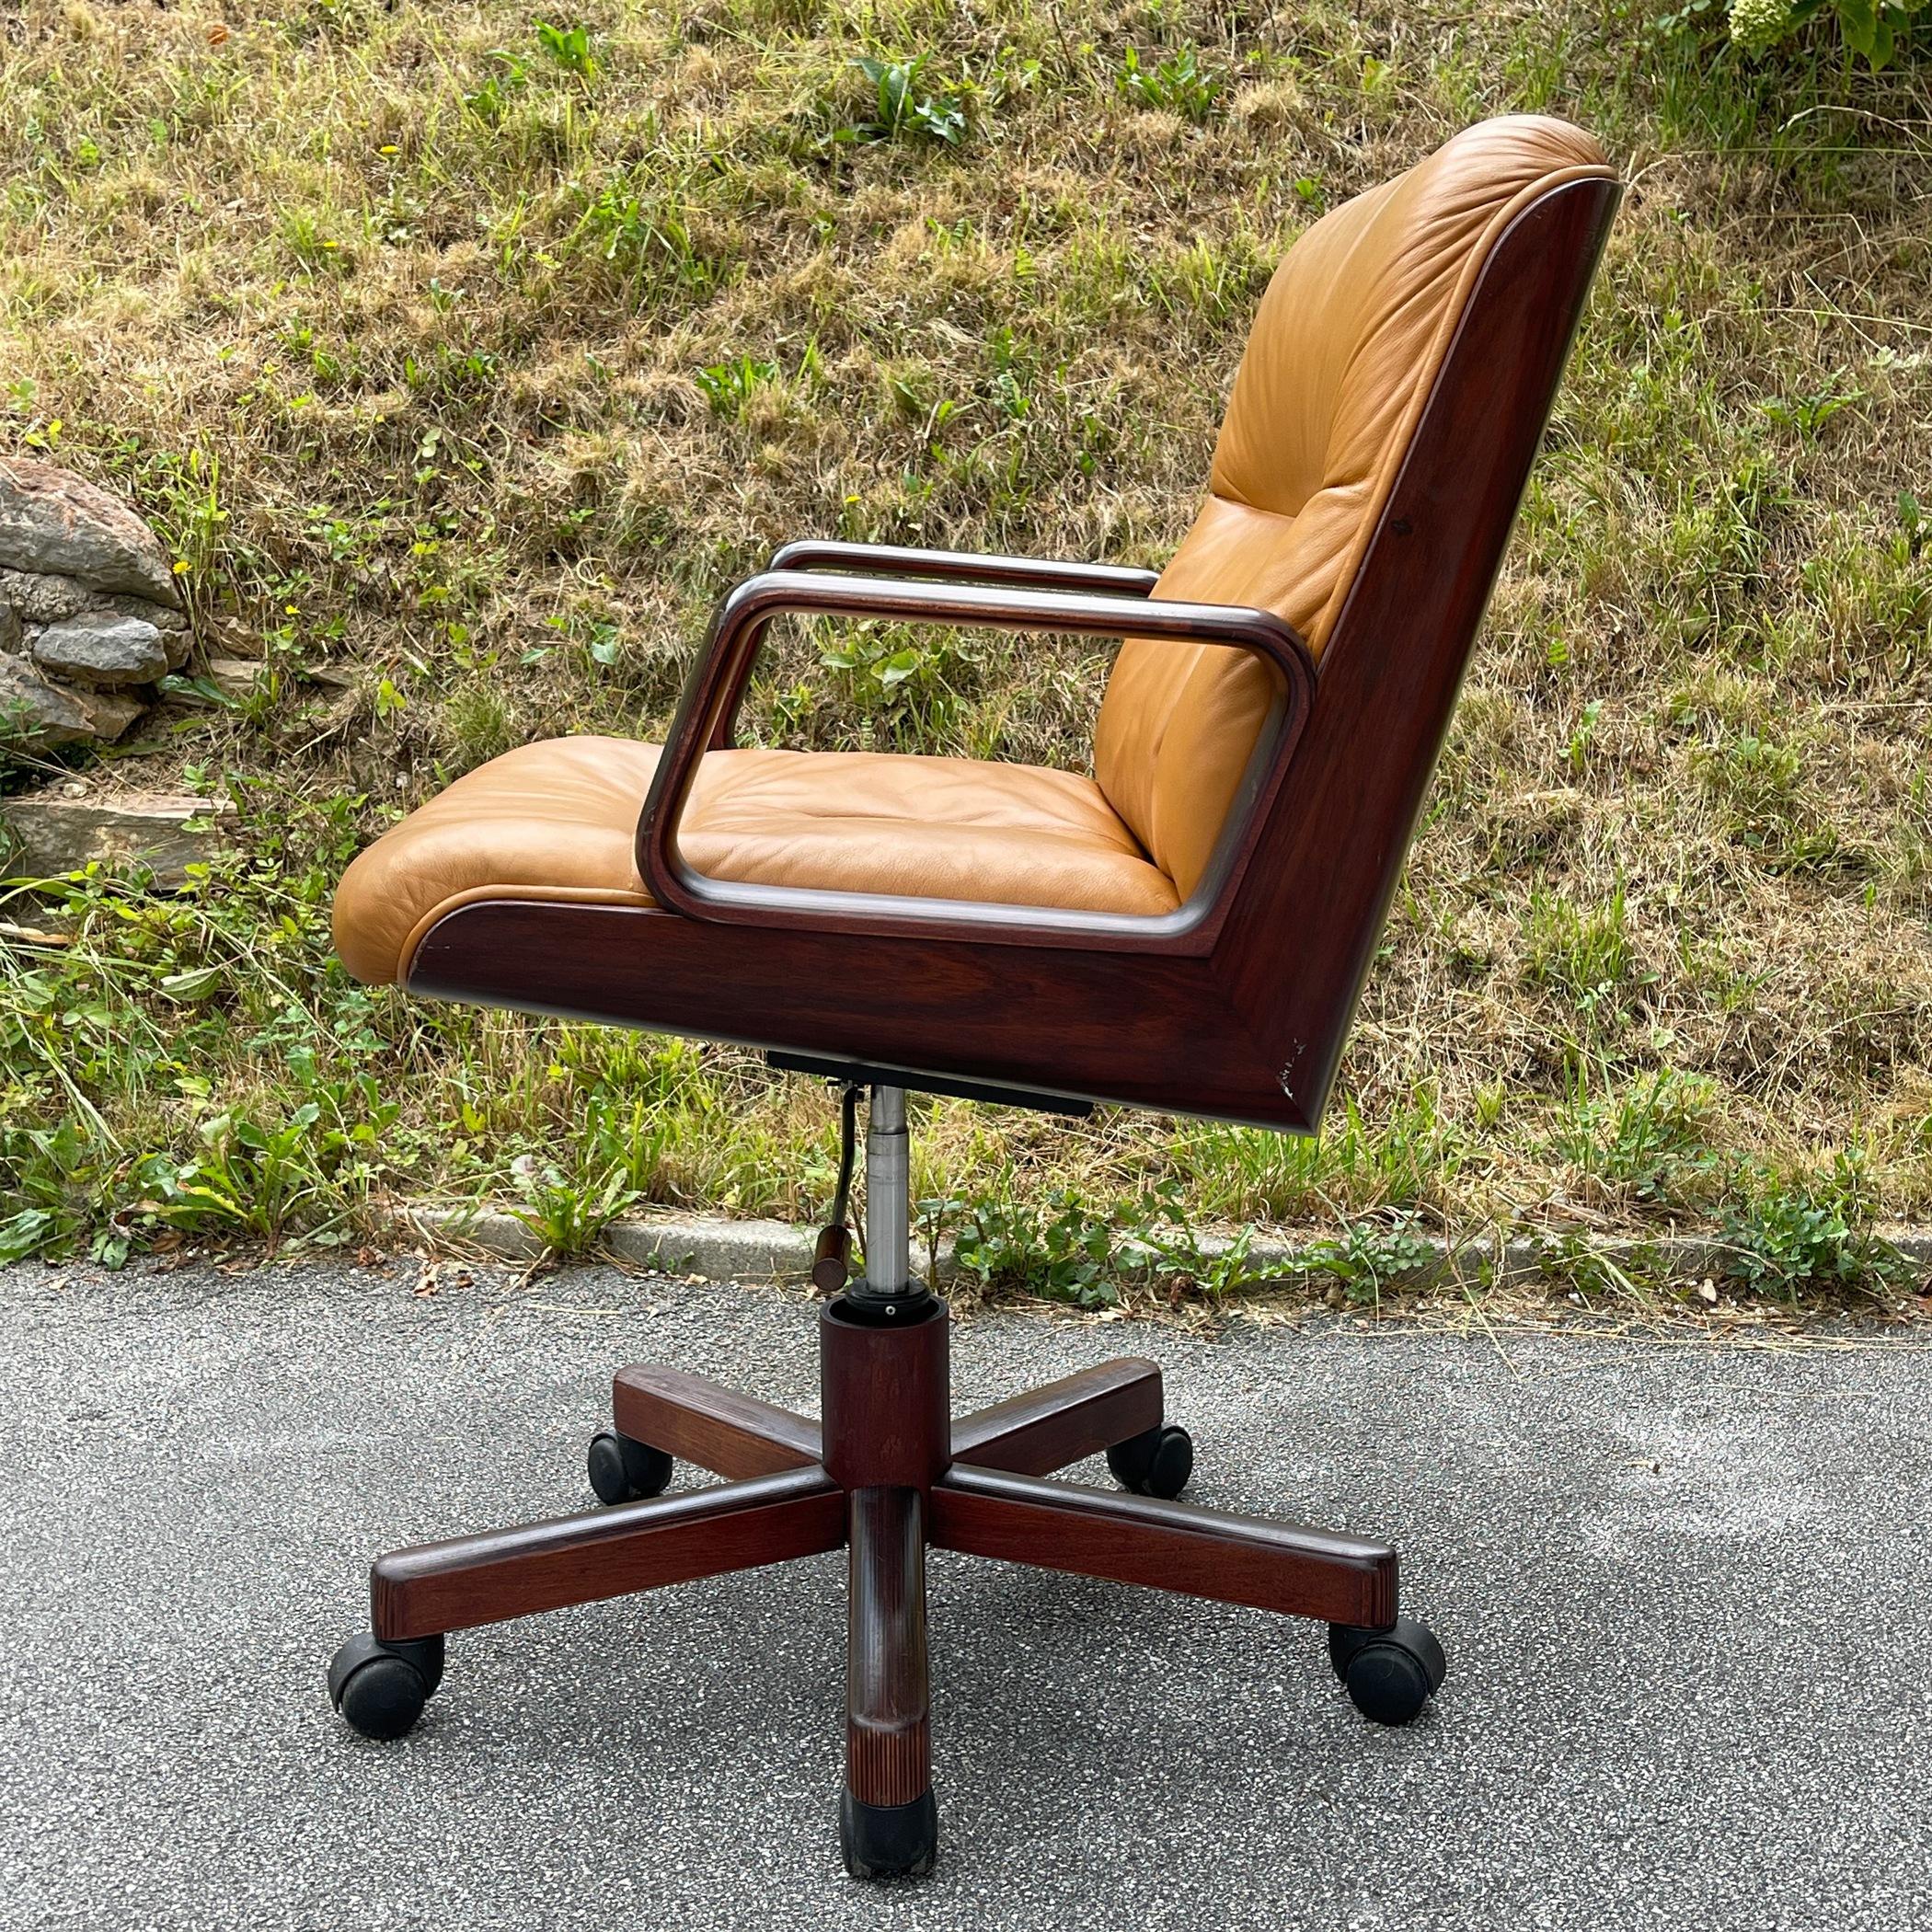 1970s swivel chair